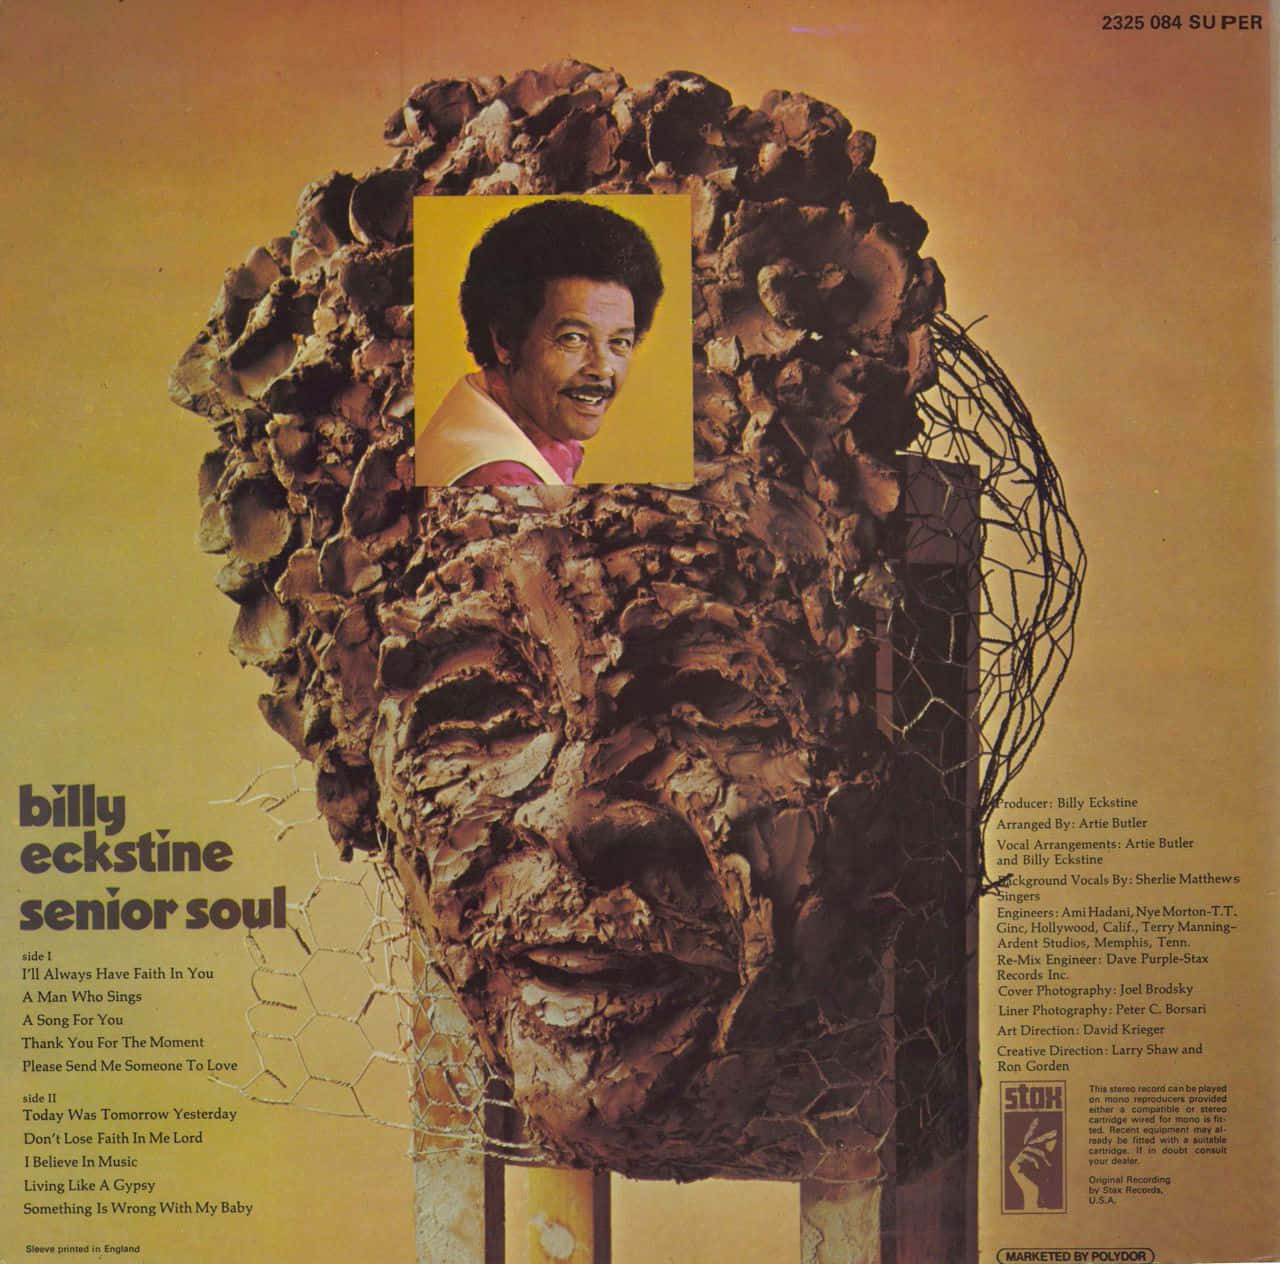 Billyeckstine Senior Soul Vinyl Cover Translates To 